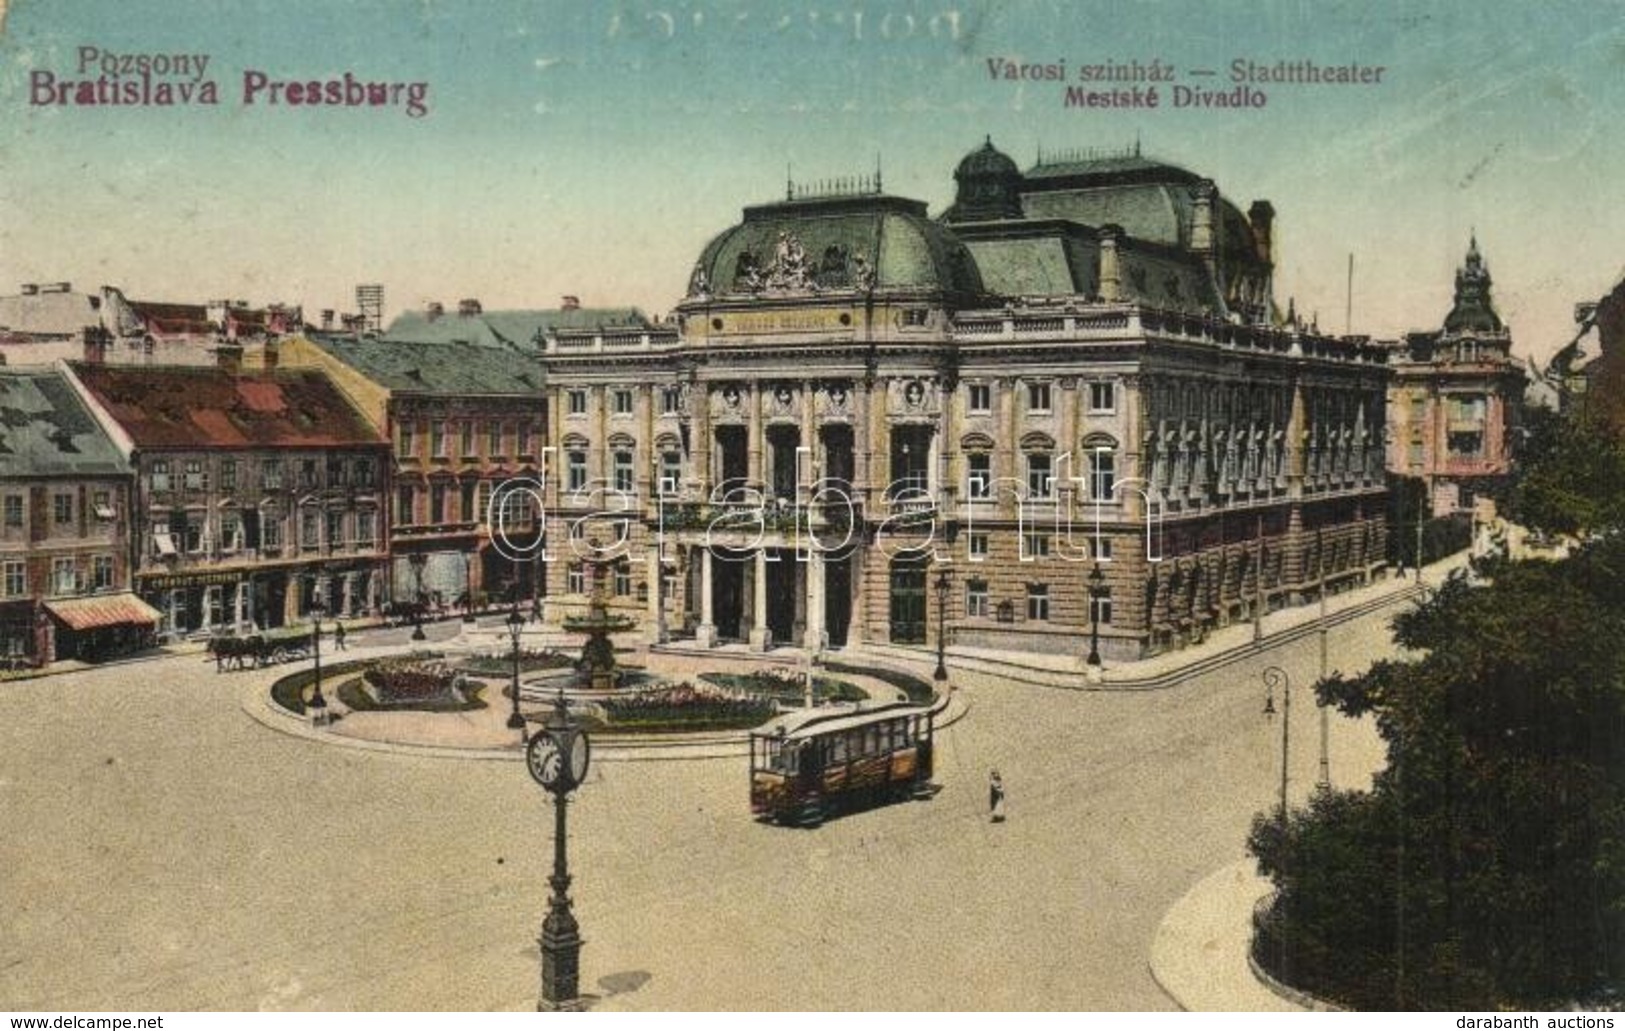 ** * 31 Db F?leg Régi Felvidéki Városképes Lap / 31 Mainly Pre-1945 Slovakian Town-view Postcards - Ohne Zuordnung